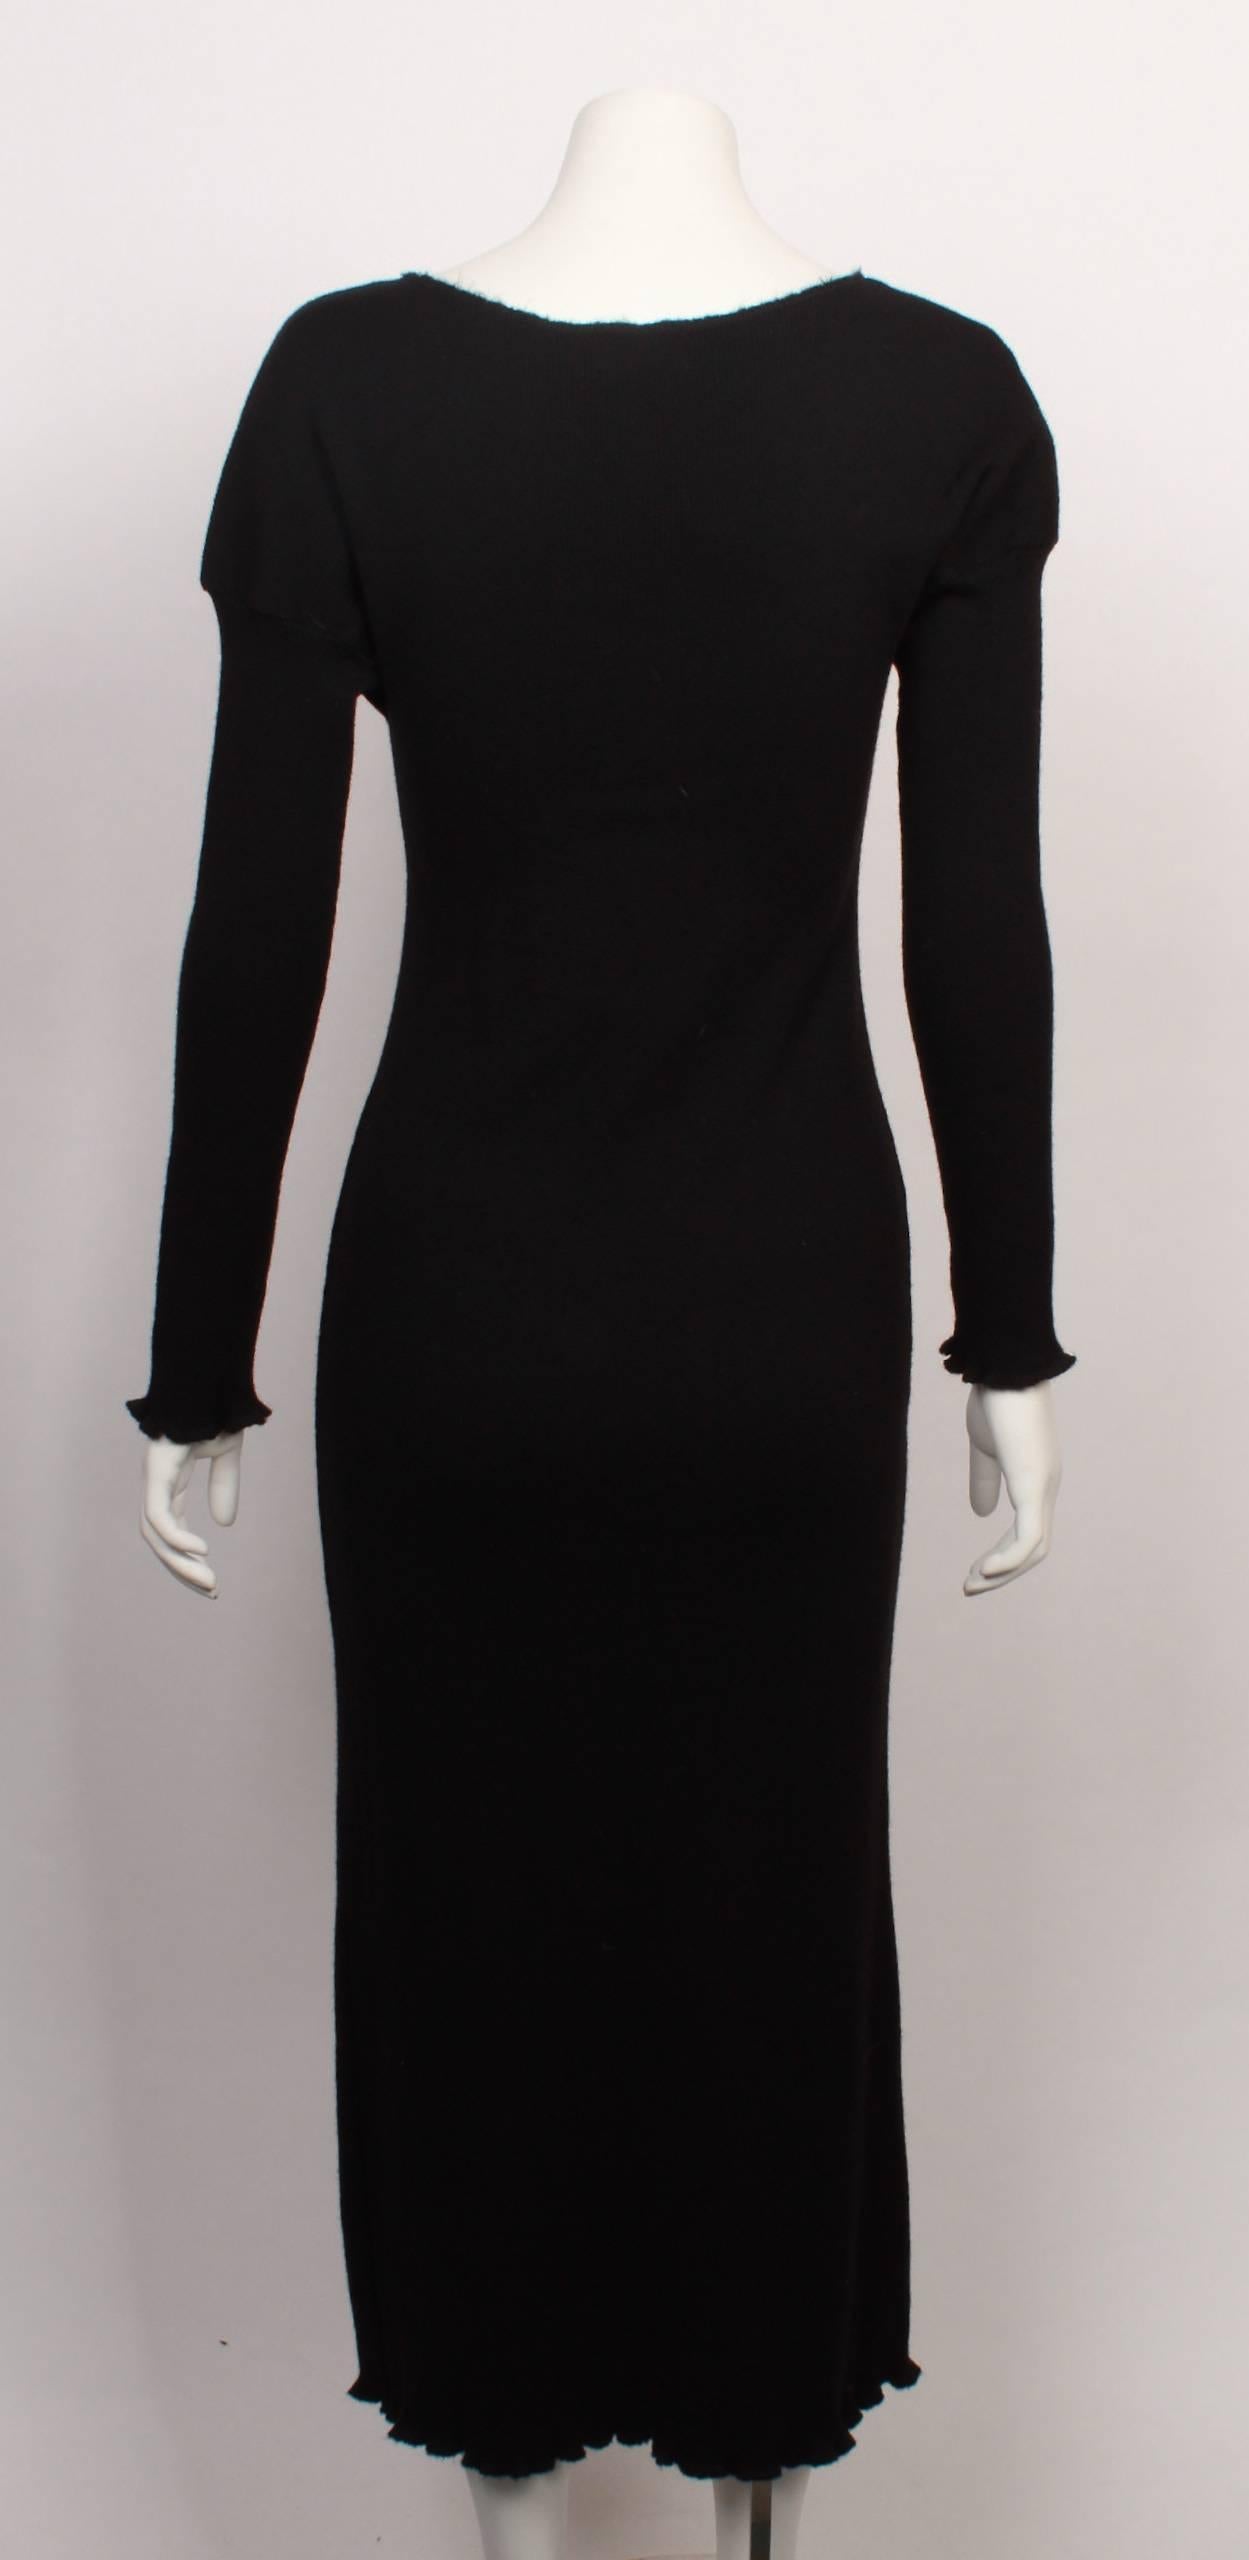 FINAL SALE
Madam Virtue & Co

Black Stretch Wool Tube Dress.